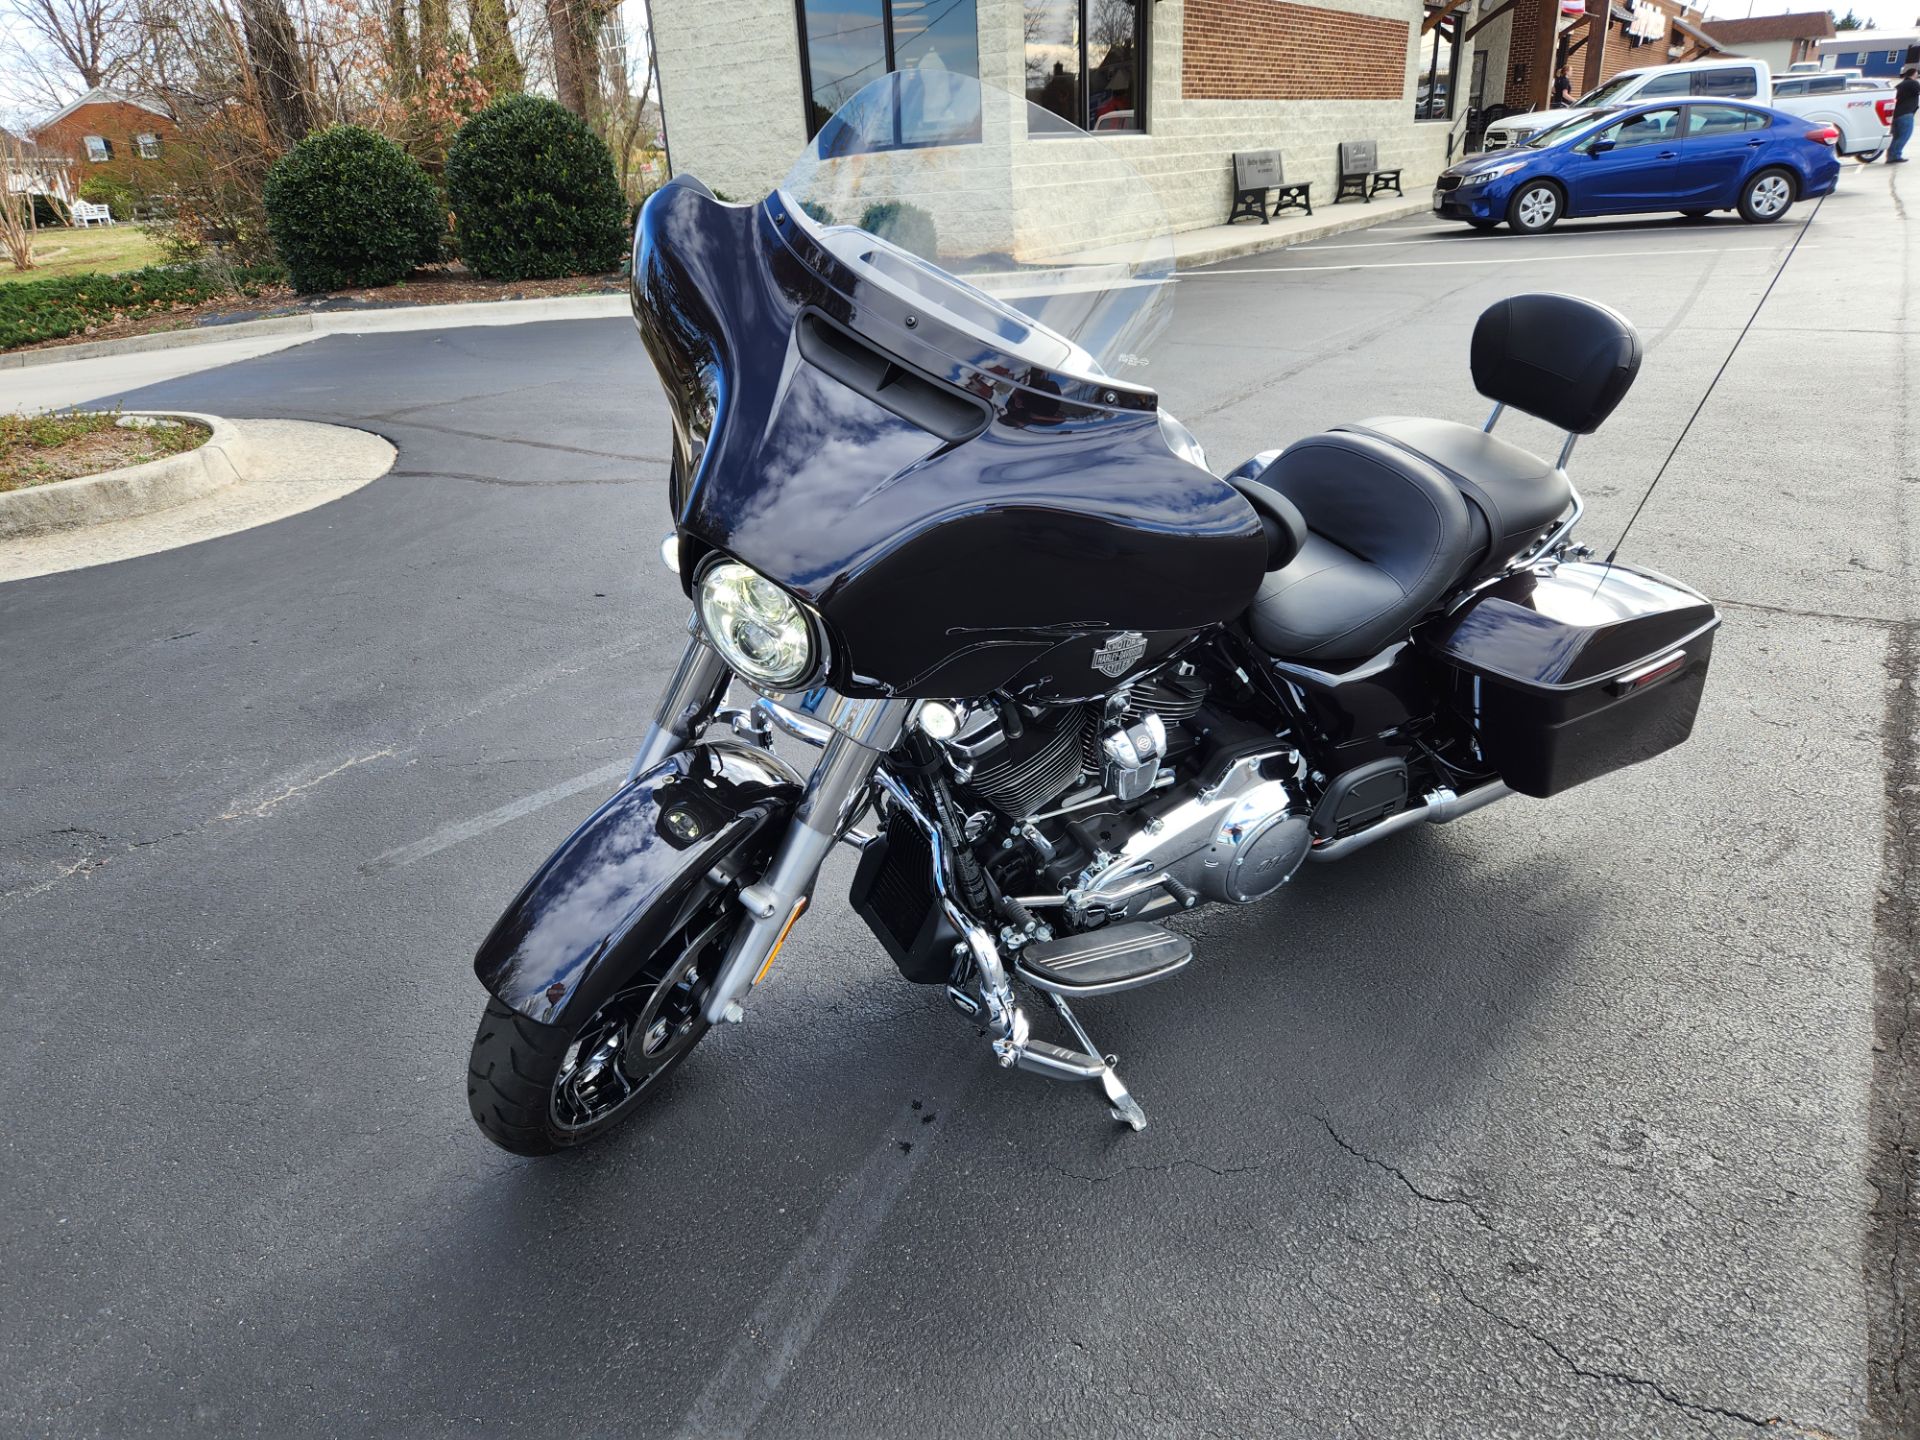 2021 Harley-Davidson Street Glide® Special in Lynchburg, Virginia - Photo 6